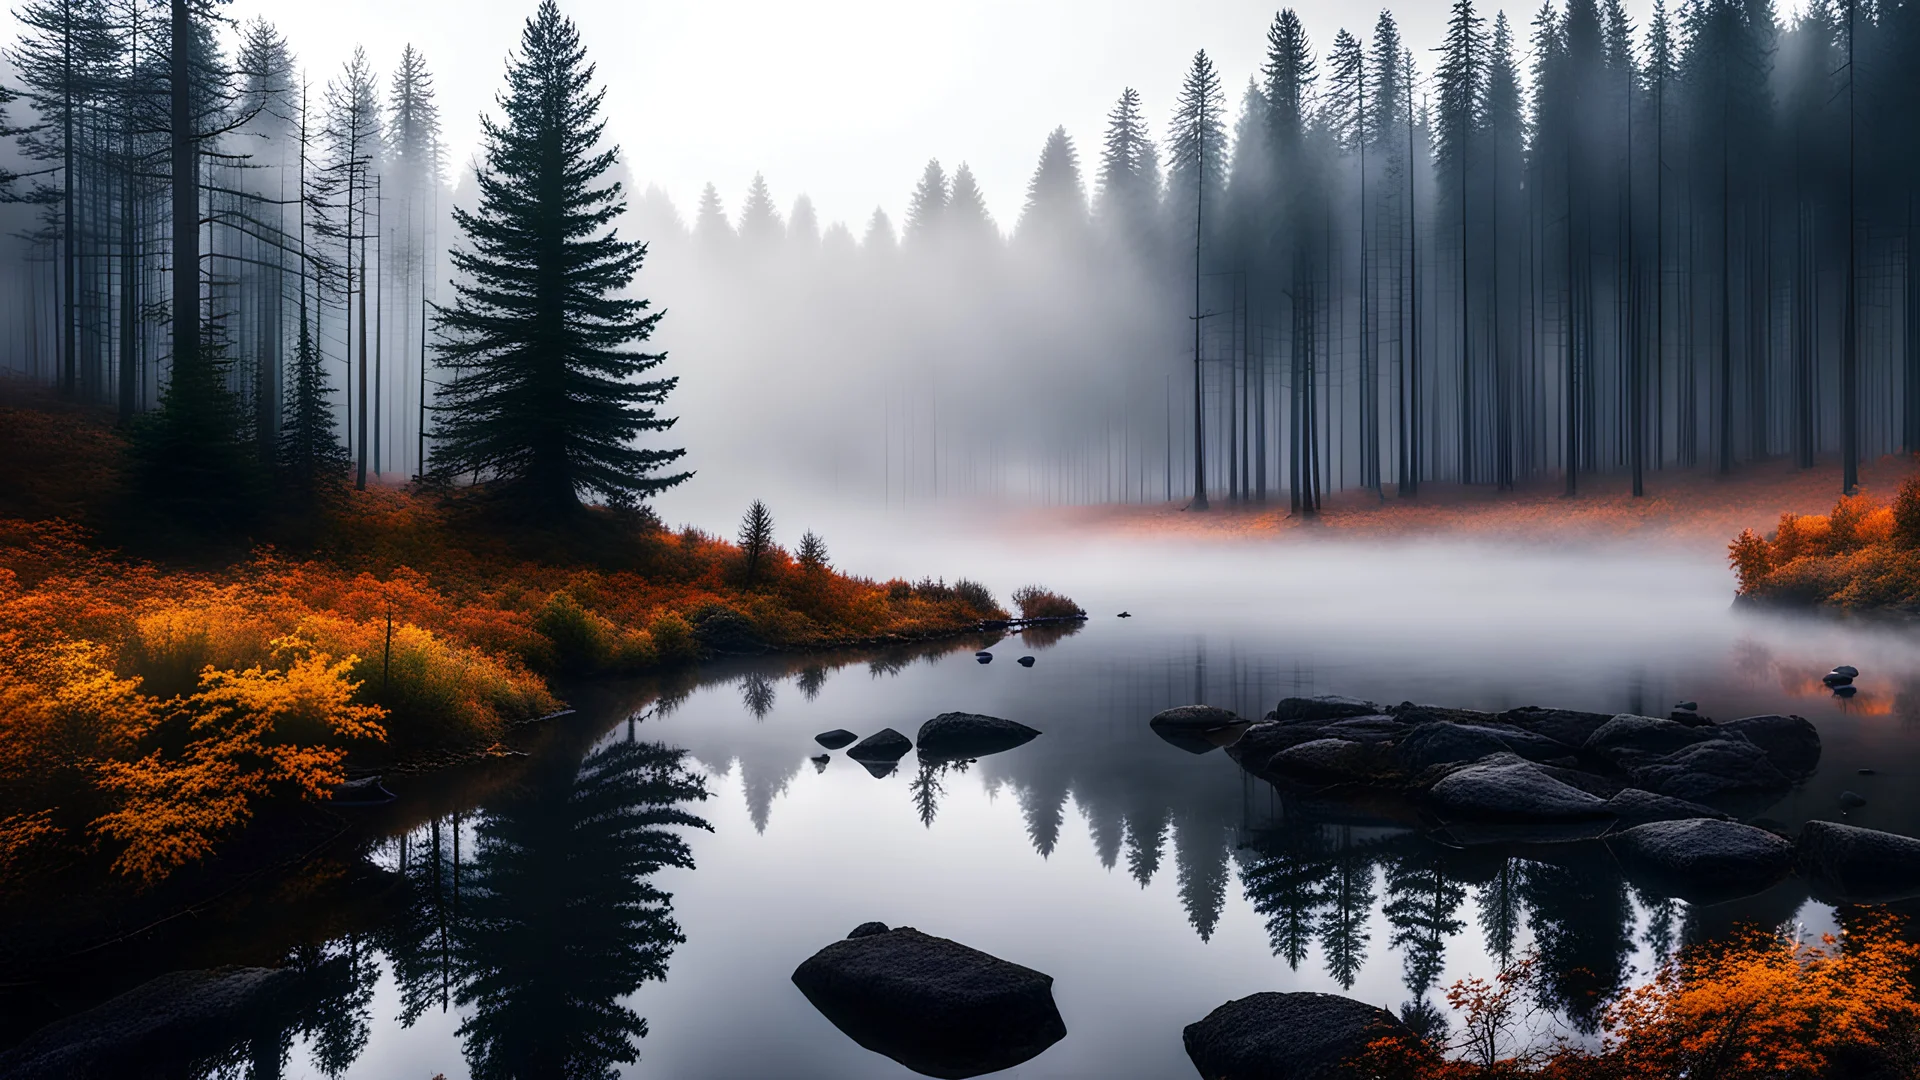 scenery of an autumn fir forrest with fog,